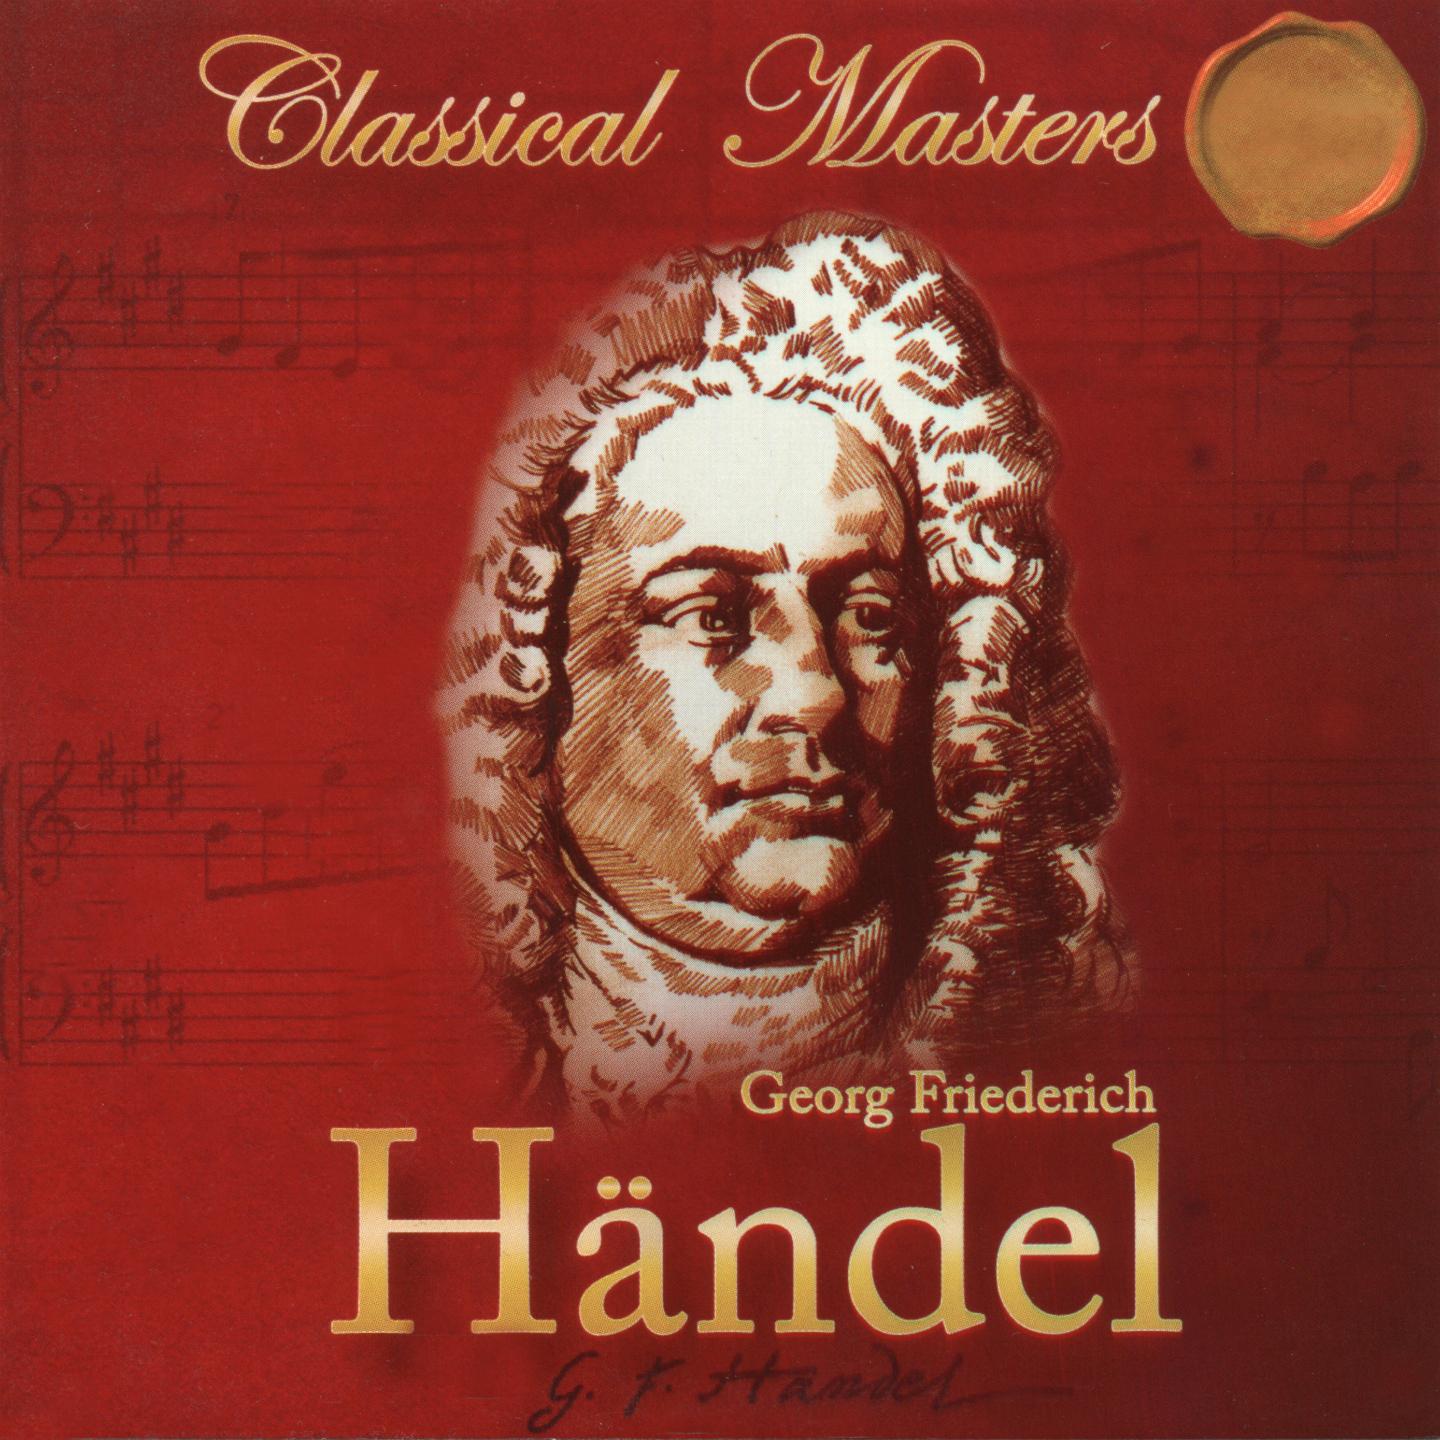 Handel: Music for the Royal Fireworks, HWV 351, Water Music Suite No. 1, HWV 348, Suite, HWV 341 & Oboe Concerto, HWV 301